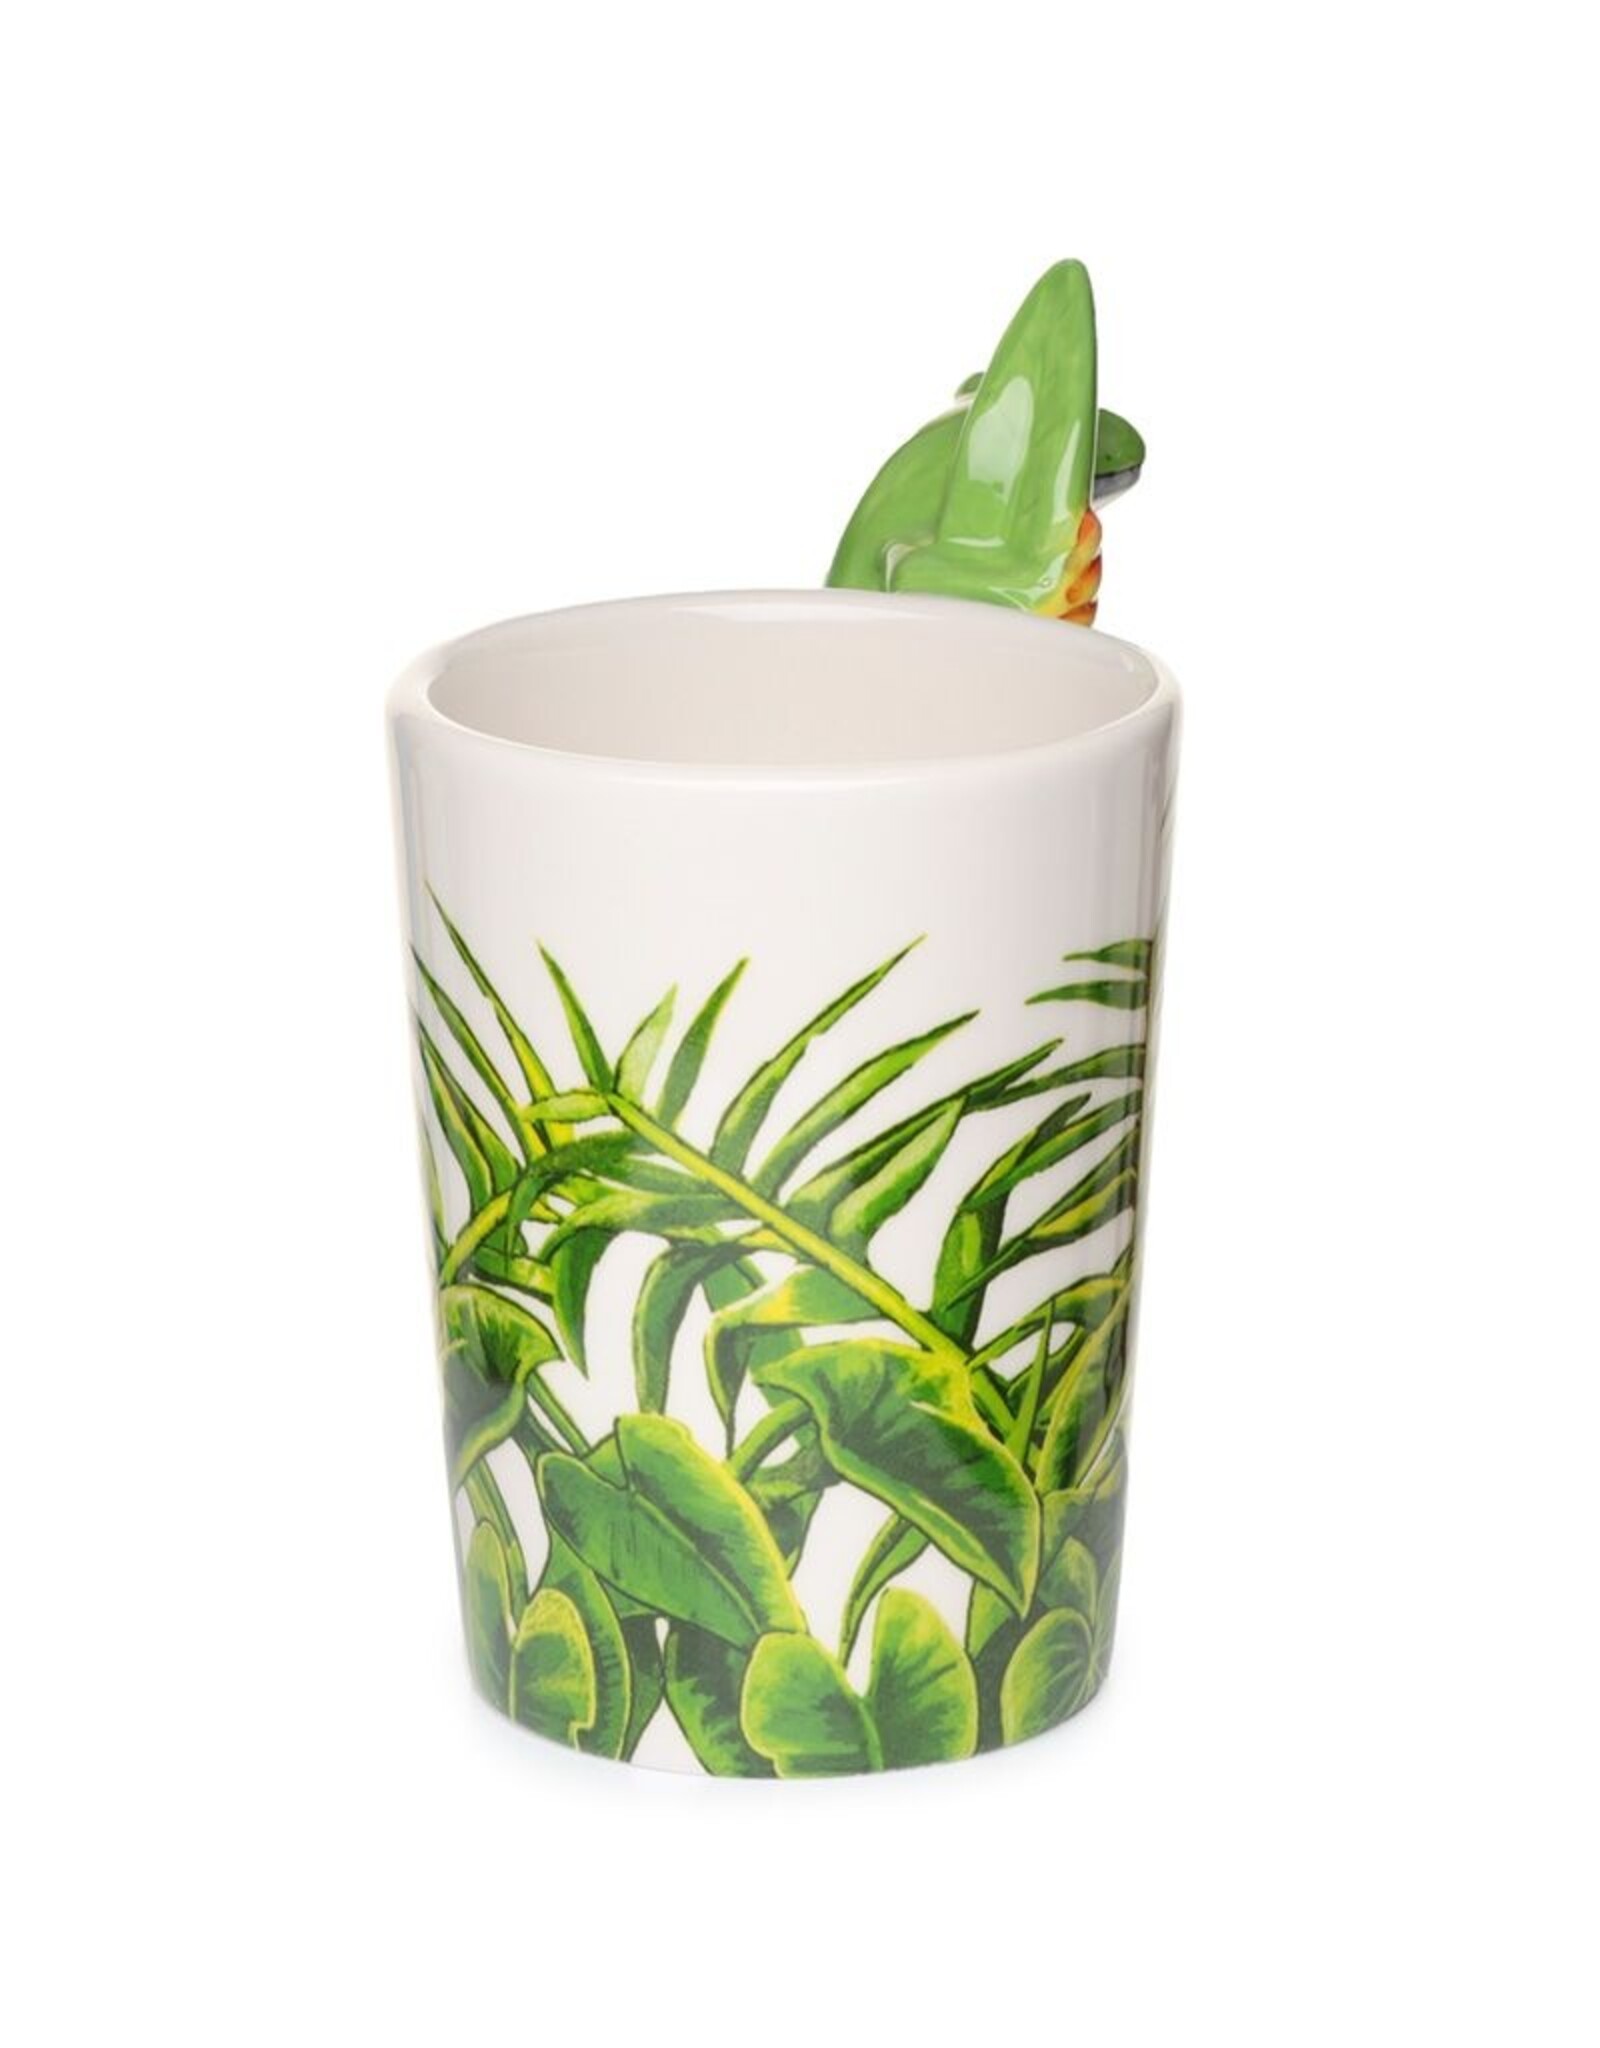 Puckator Drinkware - Tree Frog Ceramic Mug with Shaped Handle